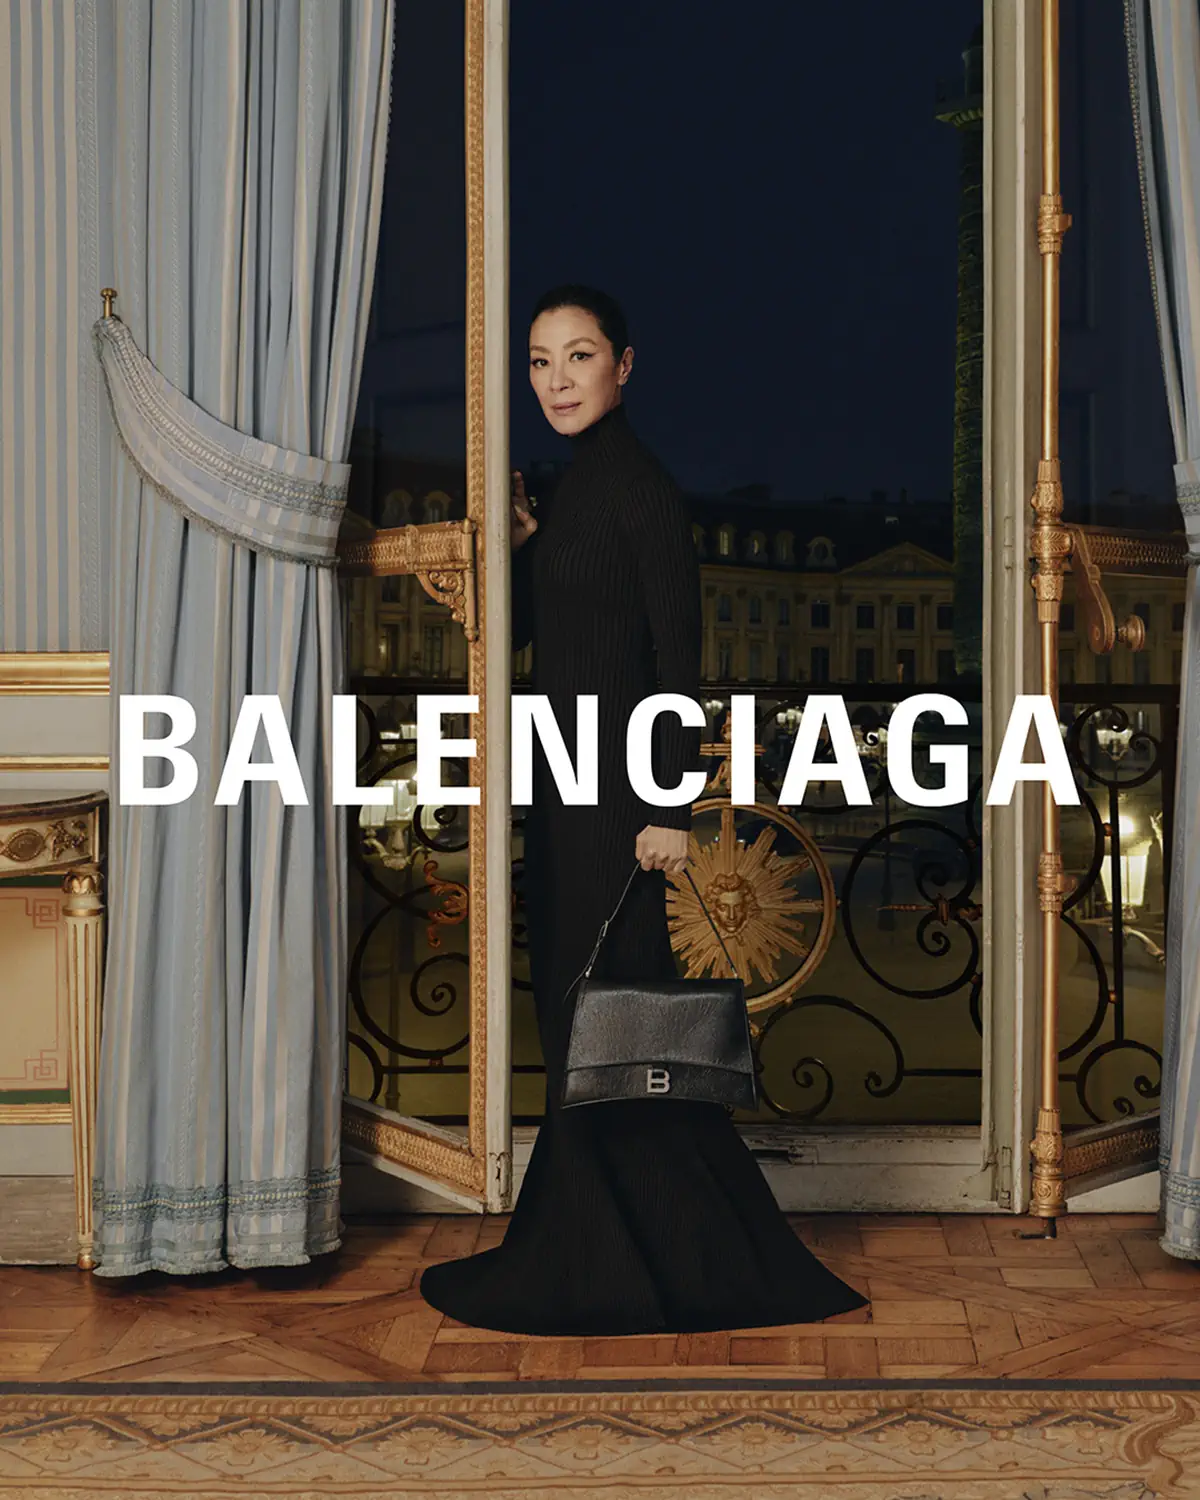 Michelle Yeoh is Balenciaga's newest brand ambassador